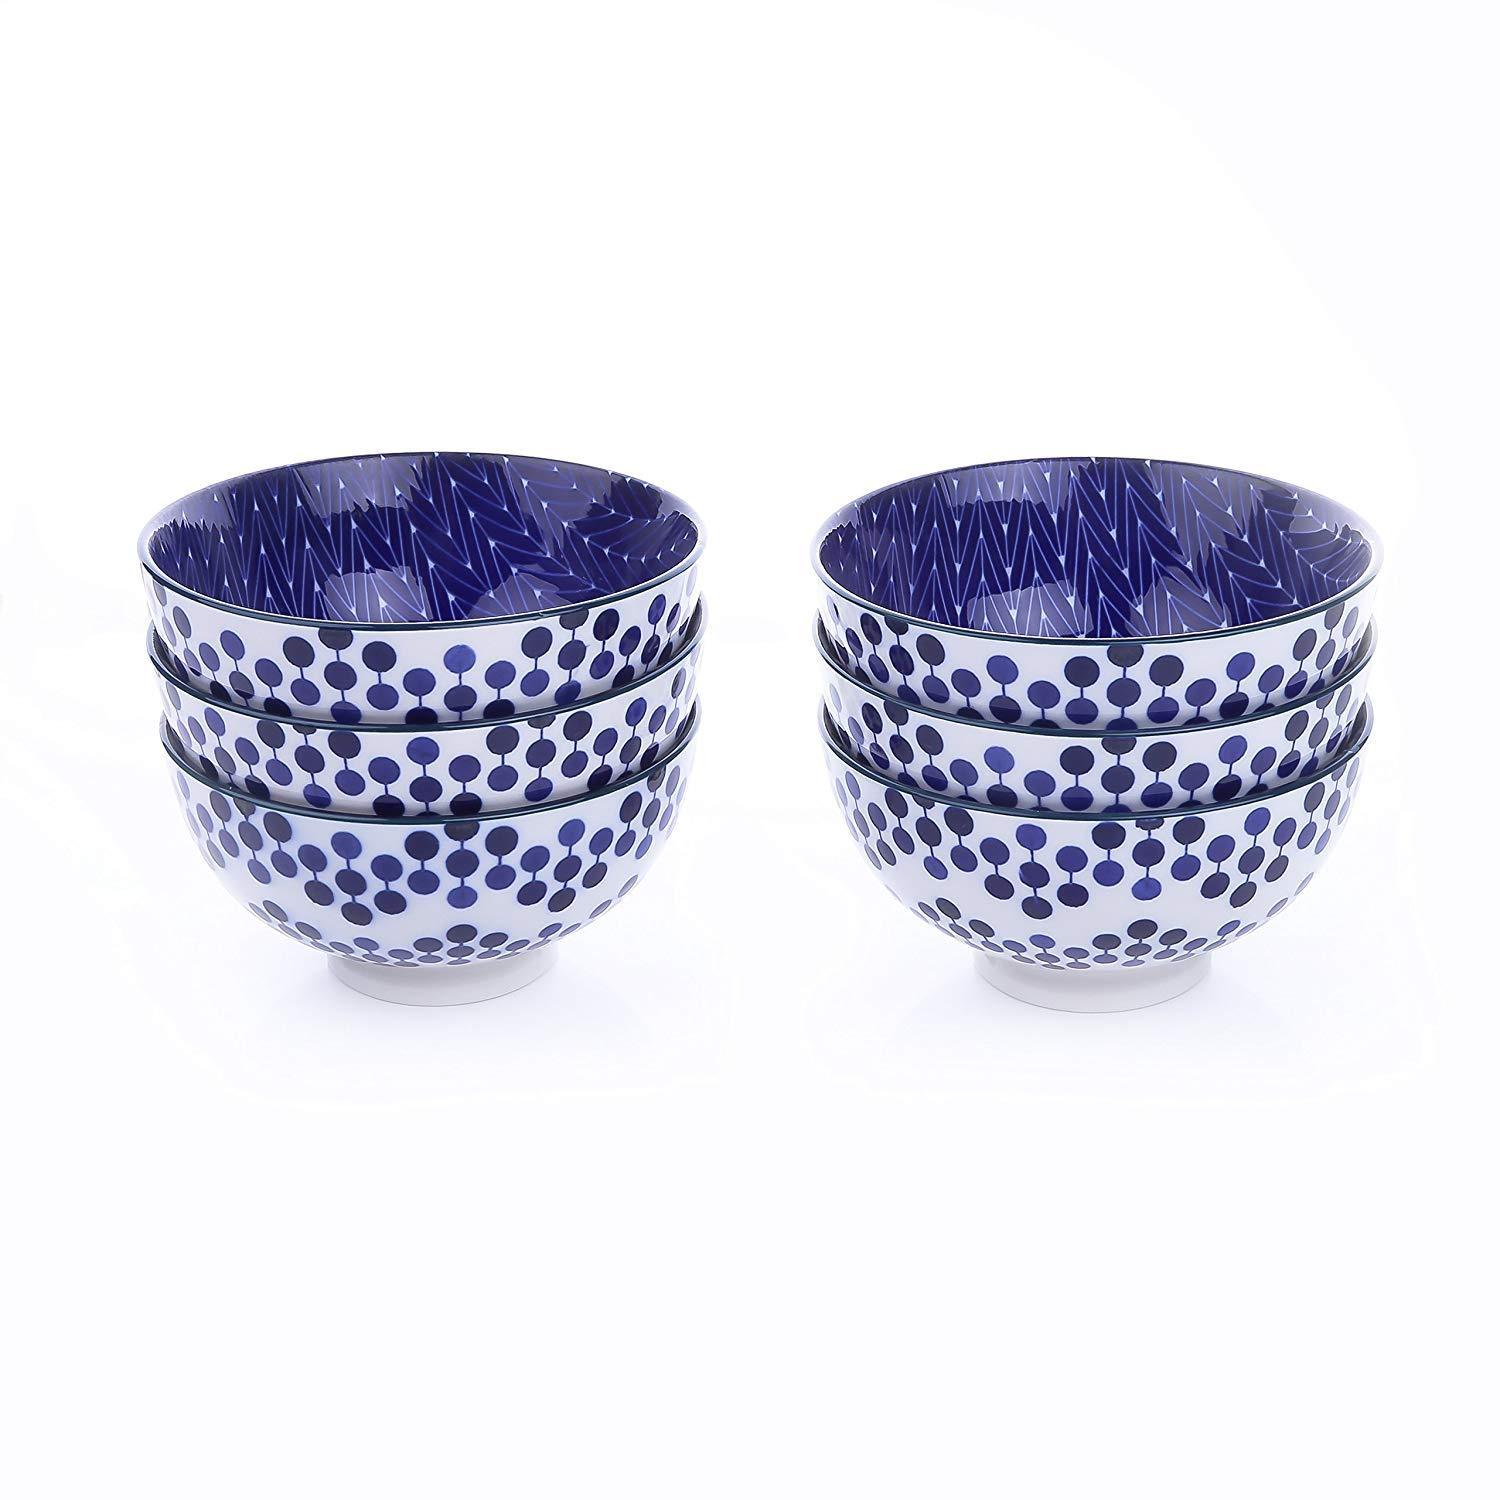 6-pieces Japanese Design Ceramic Bowls Set Blue and White Spot Bowl - Nordic Side - and, Blue, Bowl, Bowls, Ceramic, CerealSoupNoodleRamenRice, Design, Japanese, pieces, Set, Spot, Vancasso, 